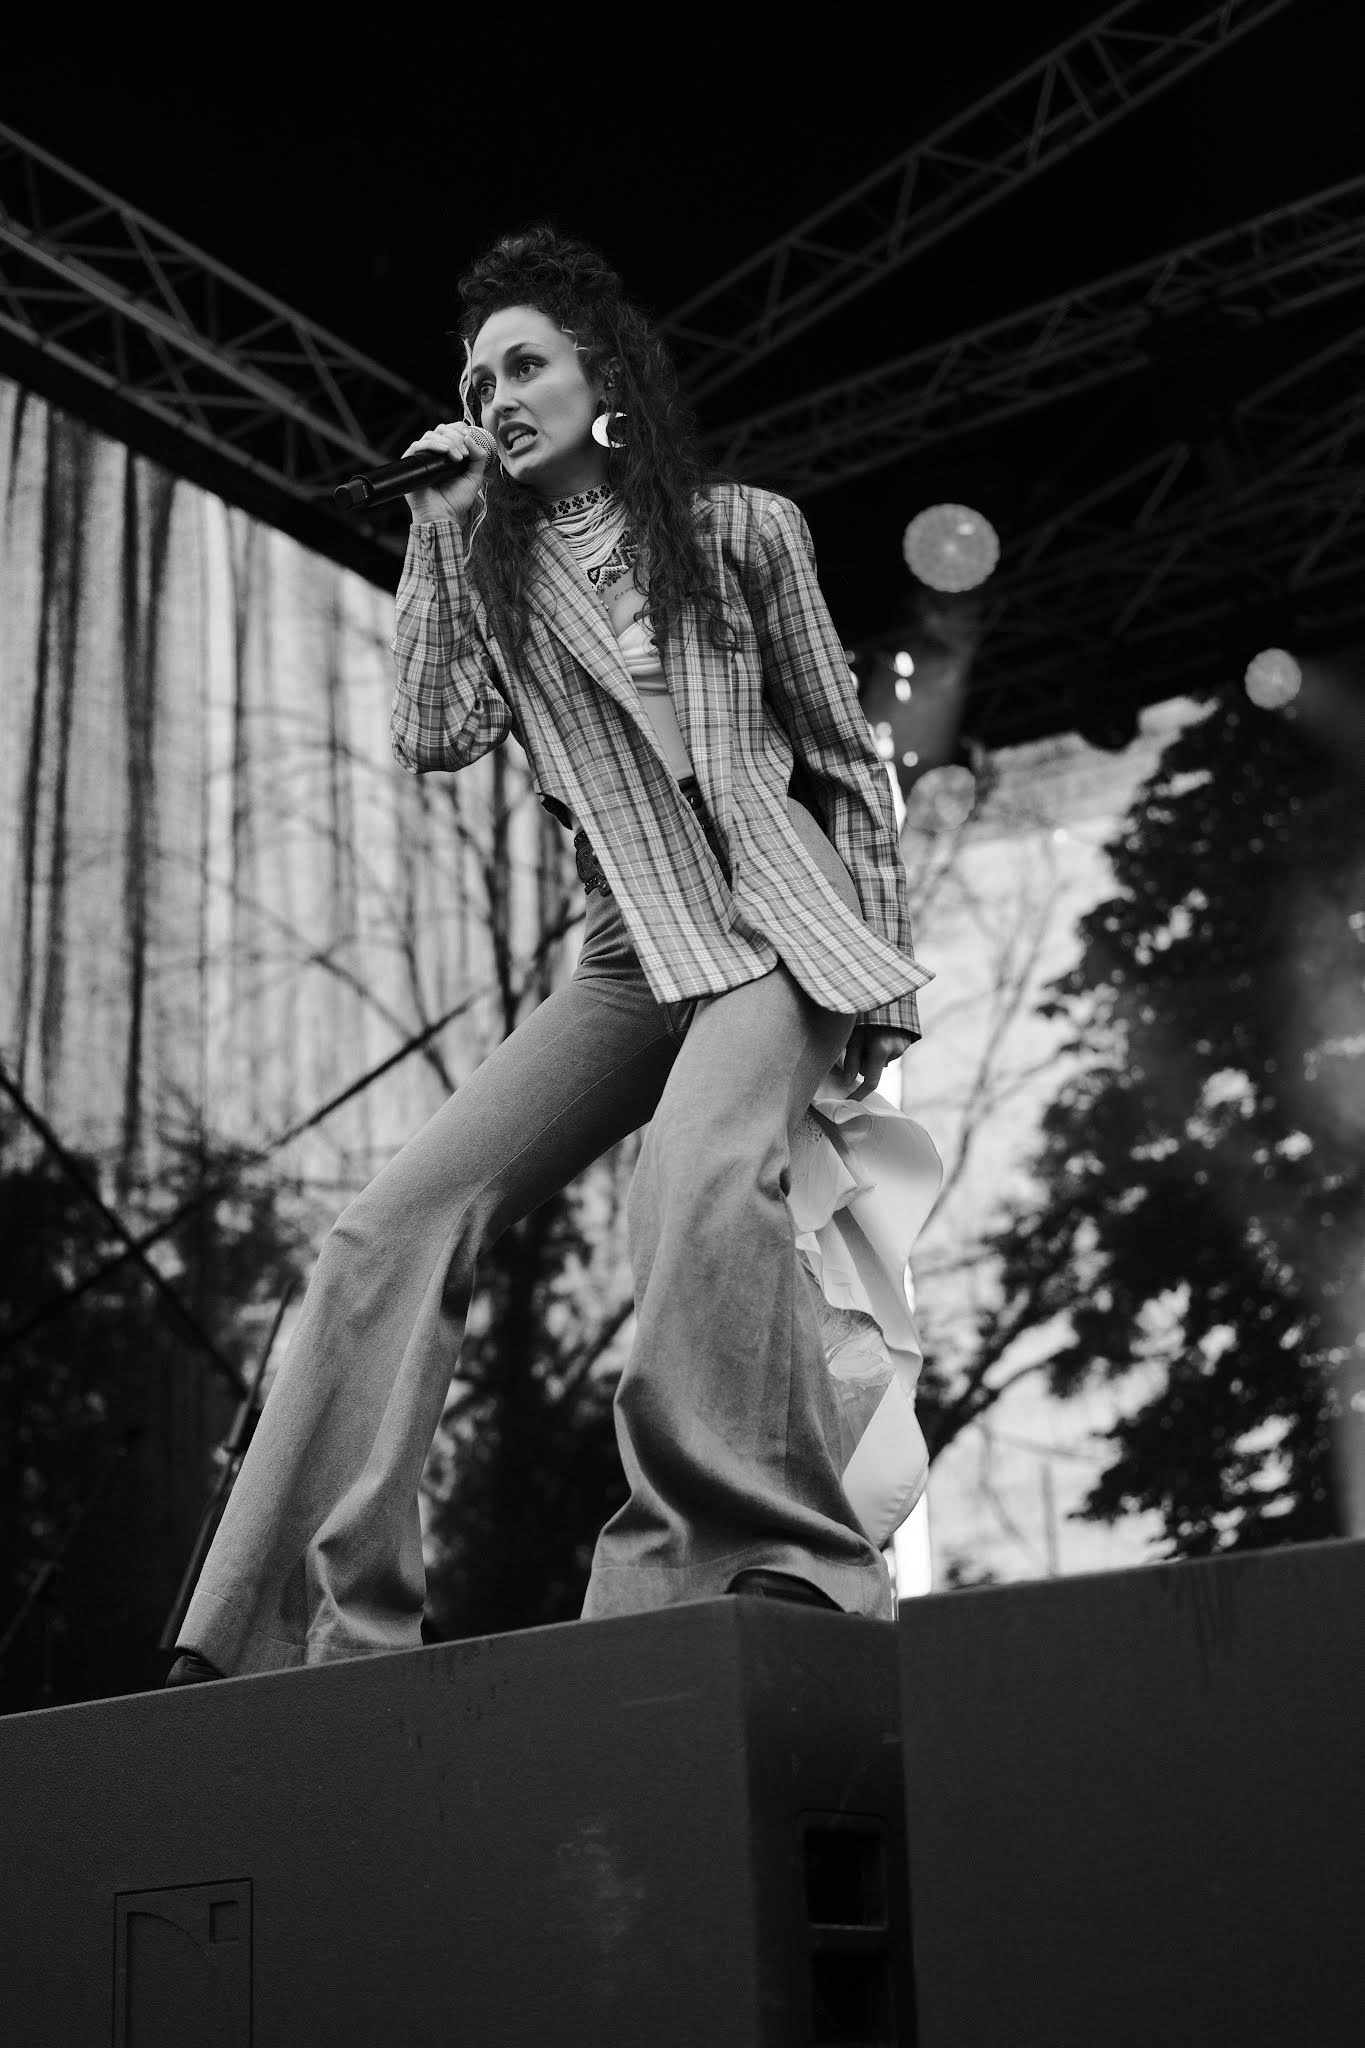 Alina Pash at Sofia Live Festival